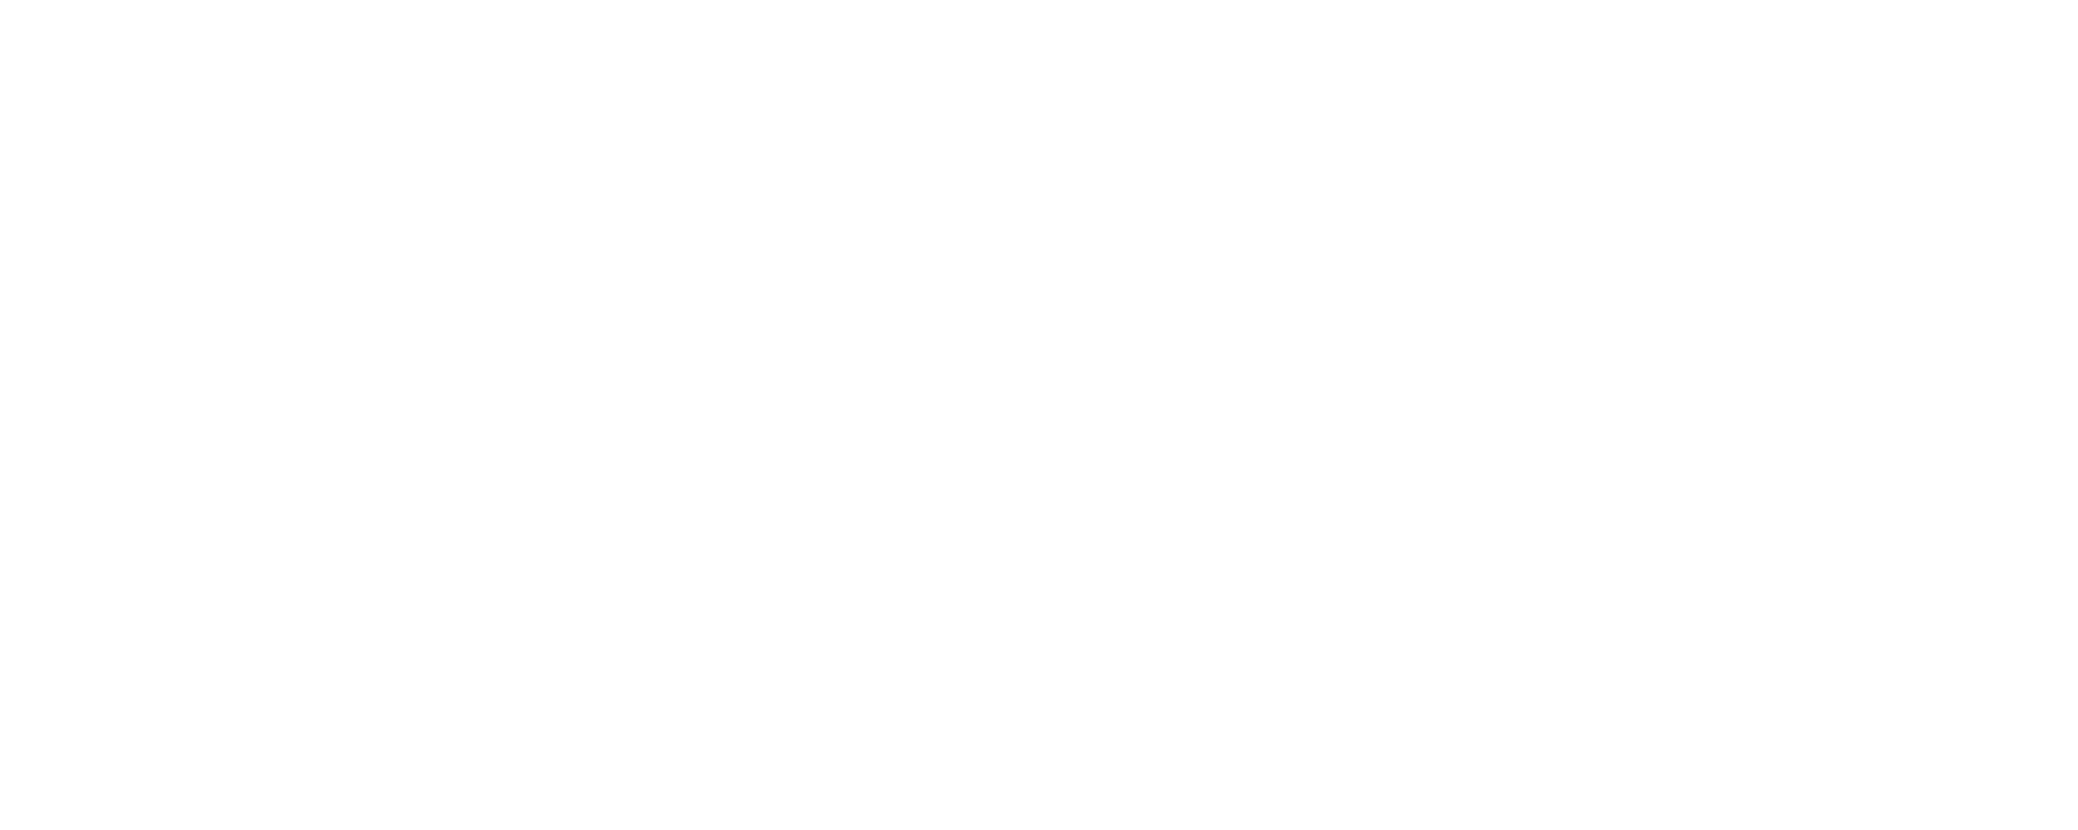 MOFF 2022 Portland - Streaming Platform